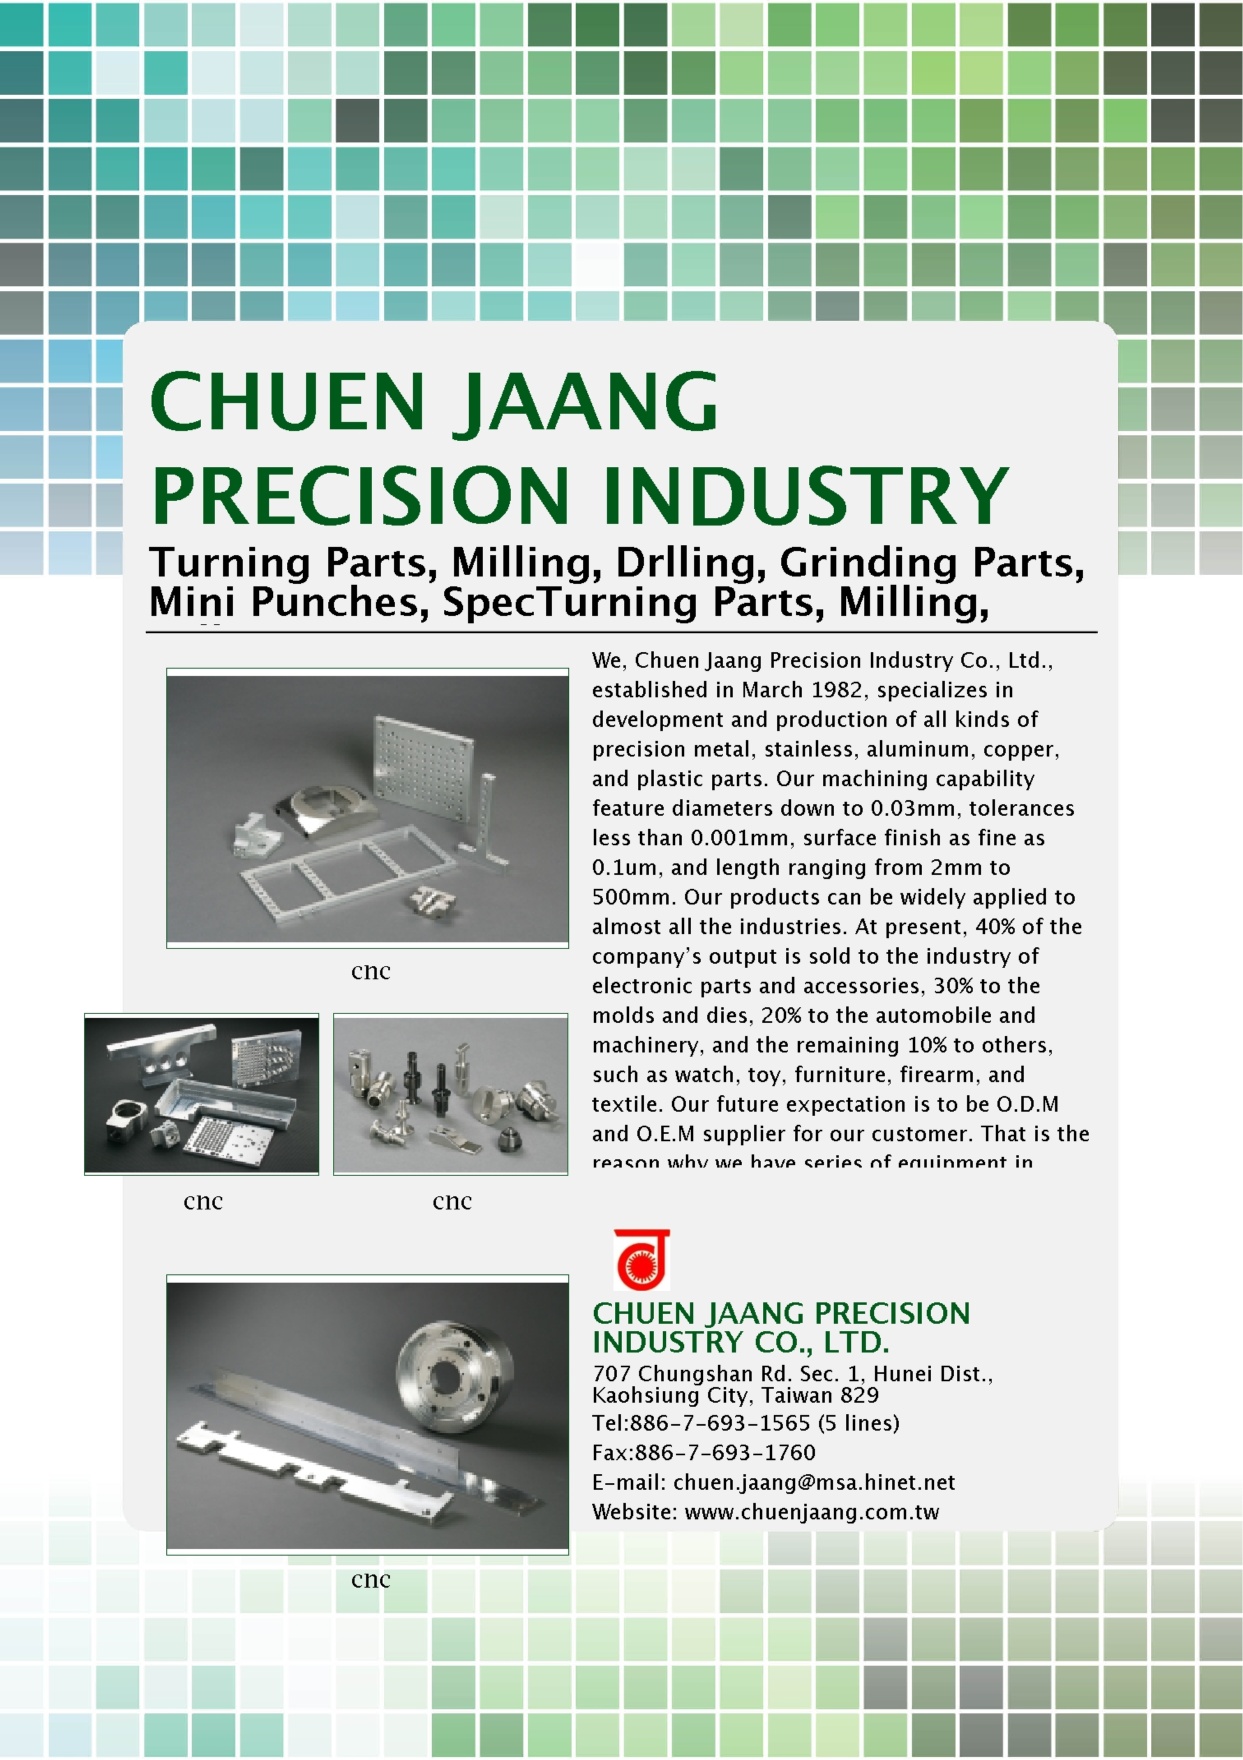 CHUEN JAANG PRECISION INDUSTRY CO., LTD.